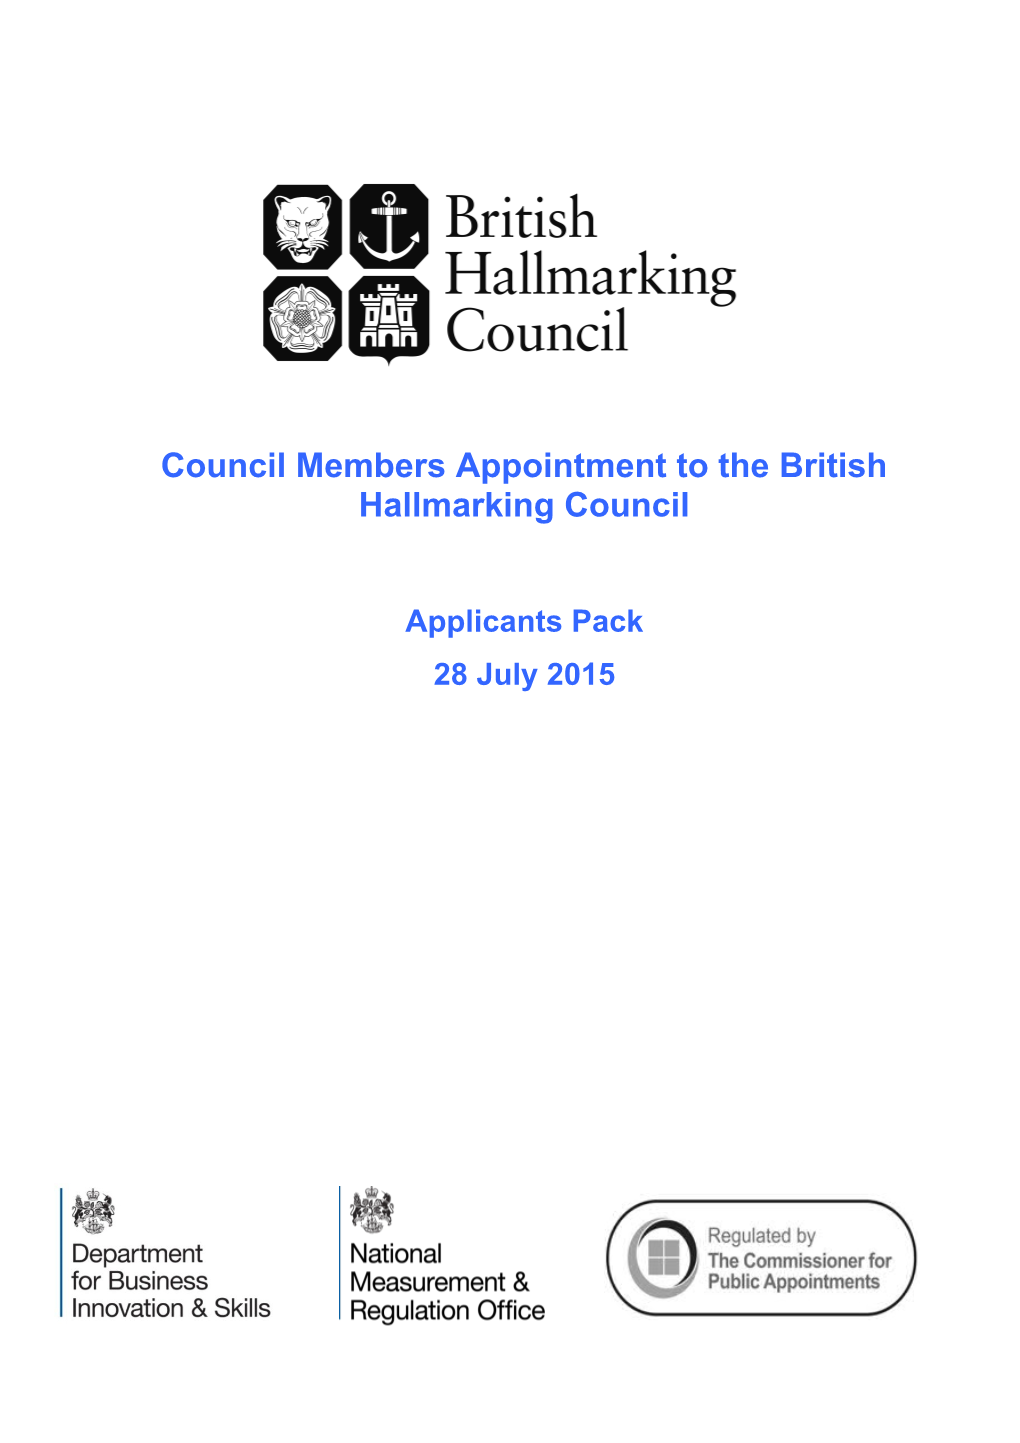 British Hallmarking Council: Council Members Appointment to the British Hallmarking Council